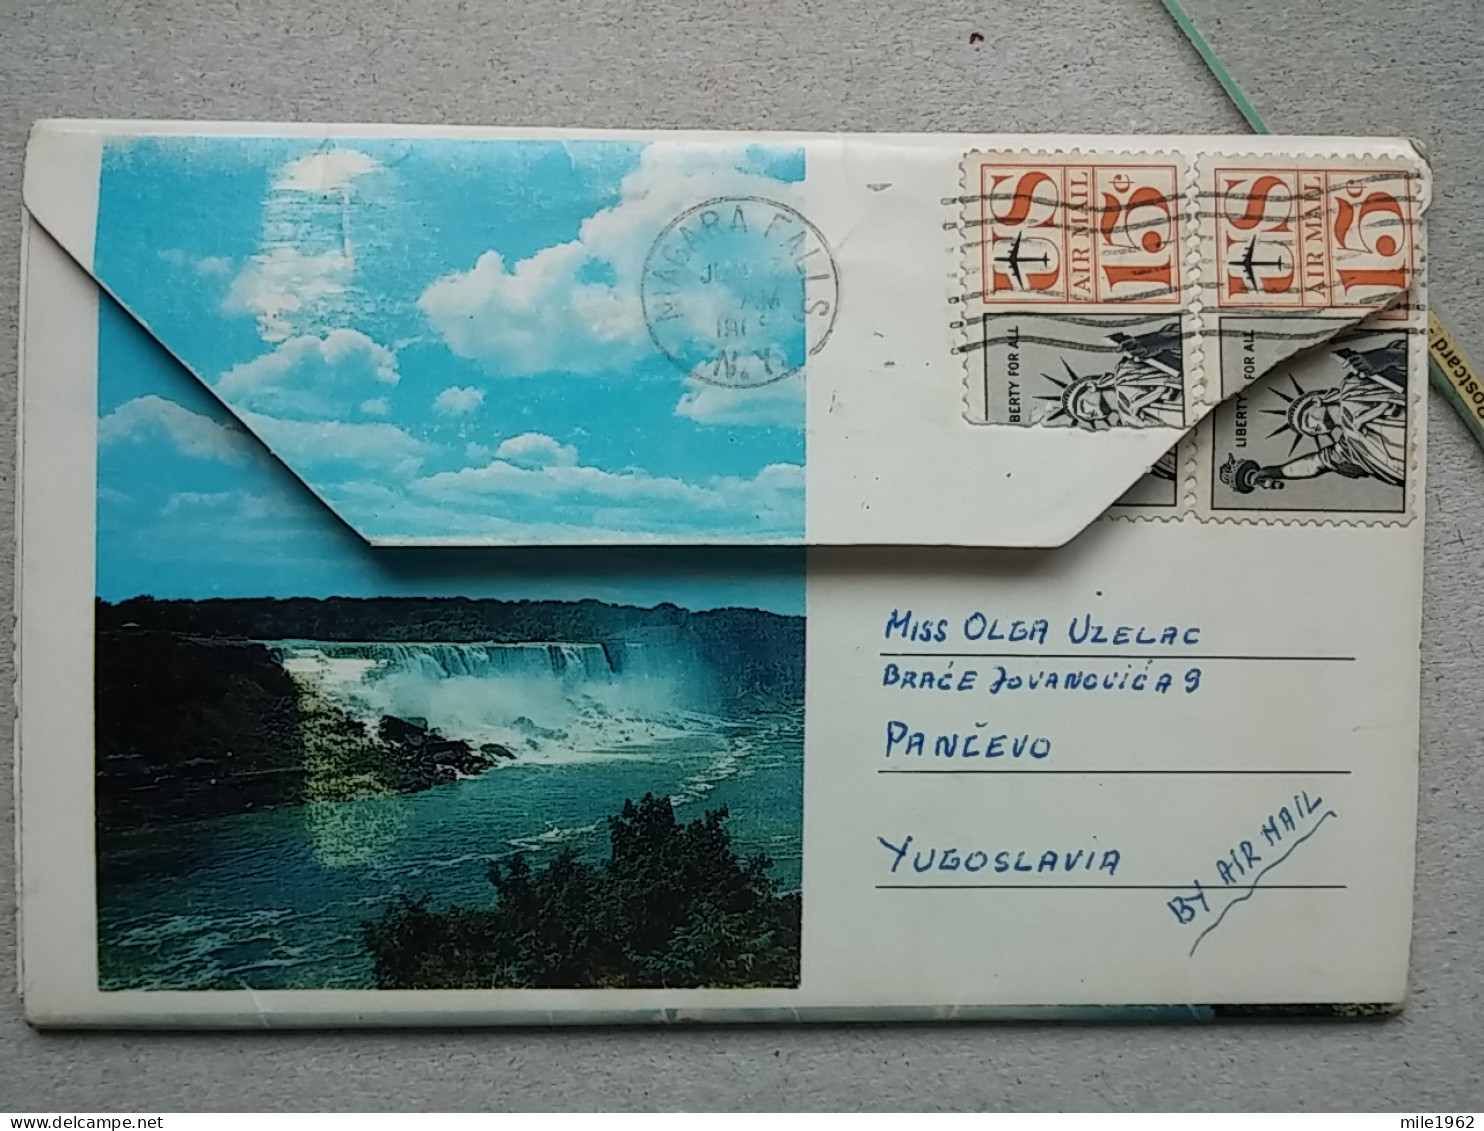 Kov 574-4 - NIAGARA FALLS, CANADA - Niagara Falls